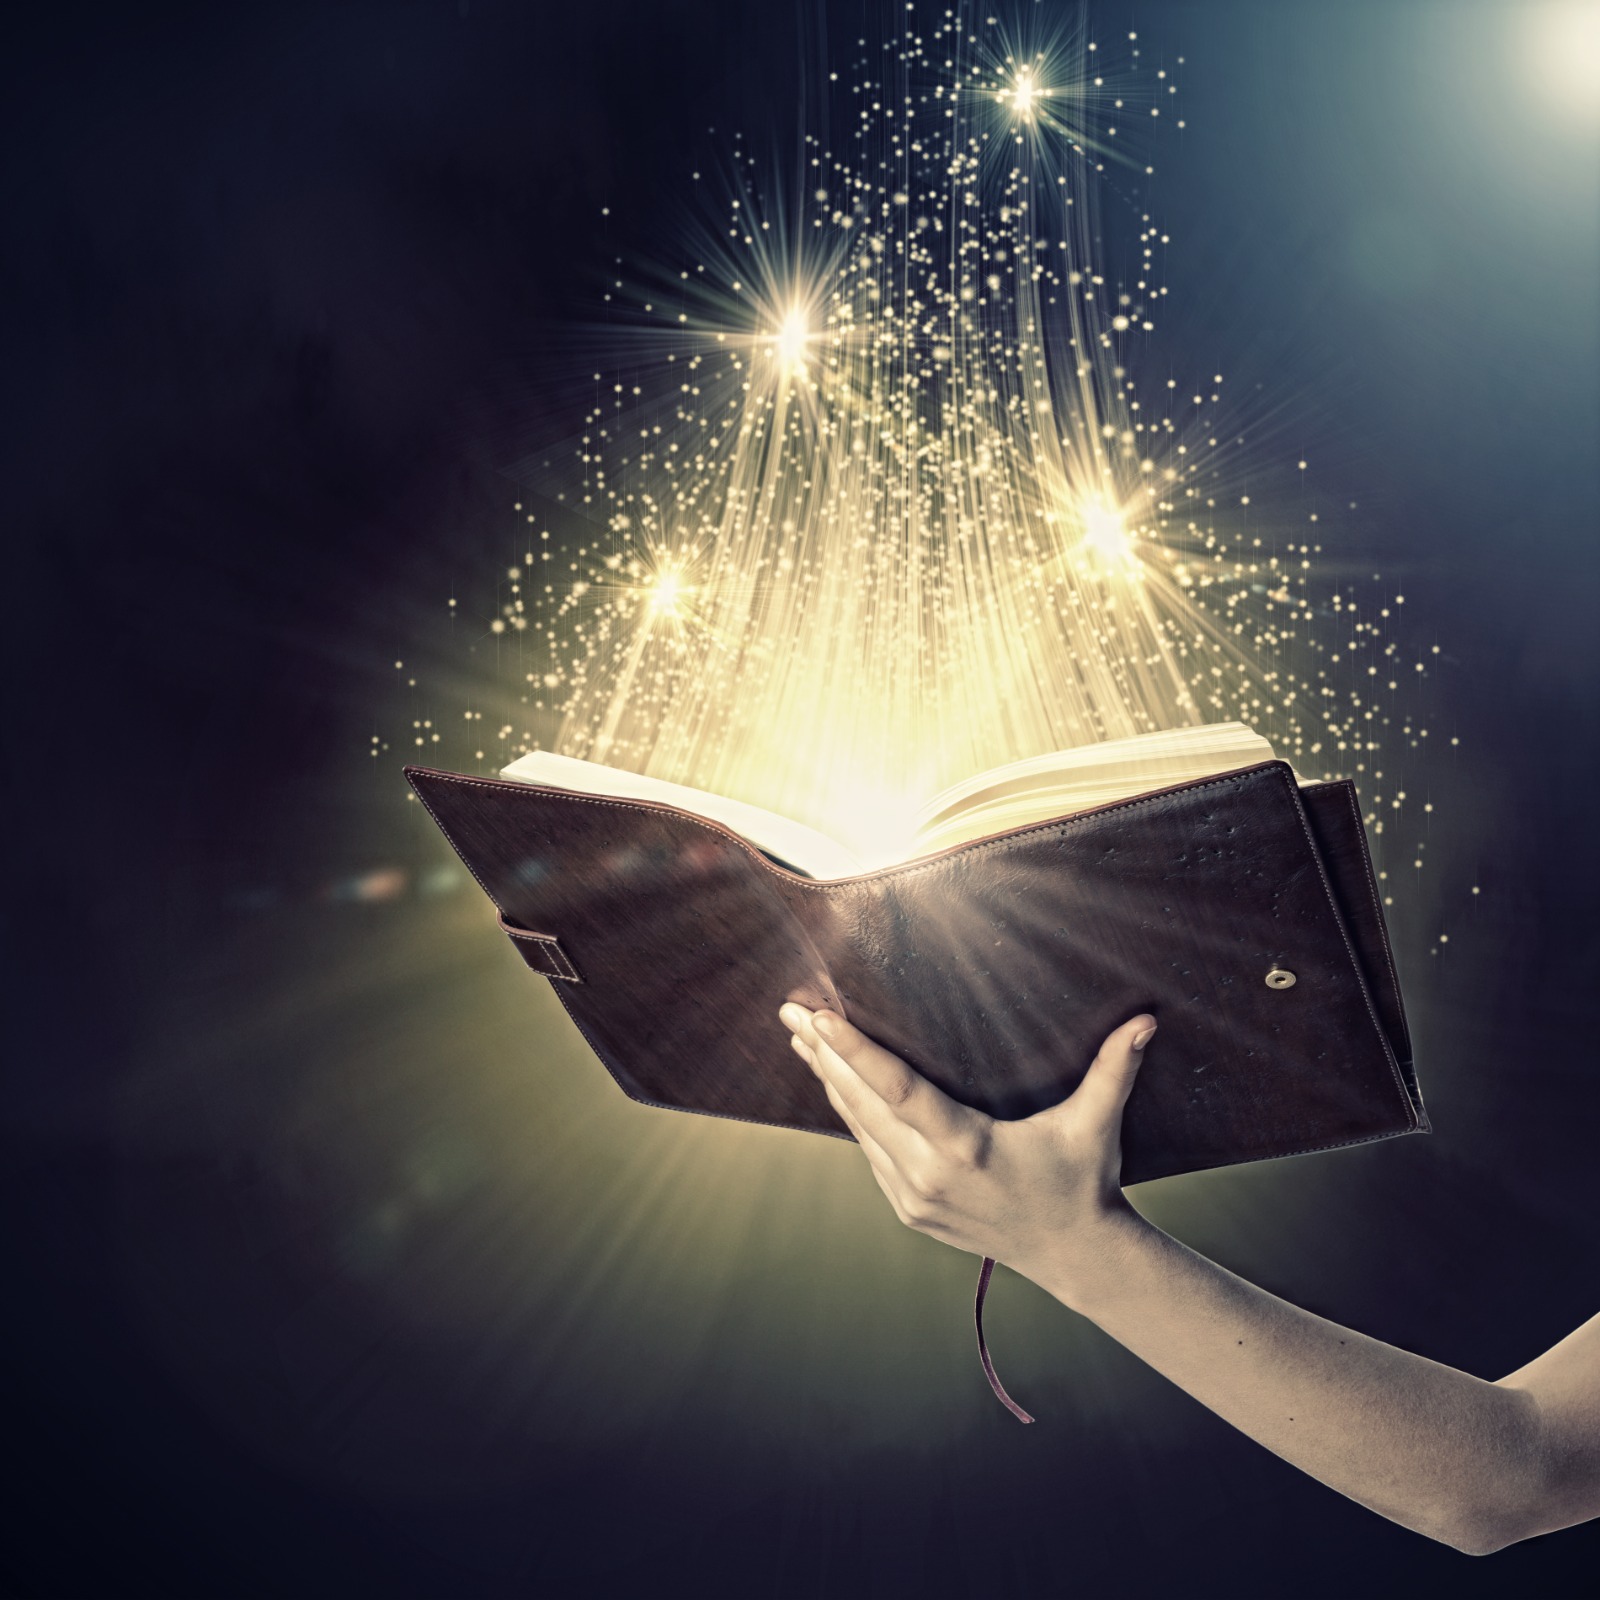 Раскрытая книга в руках. Волшебство в руках. Книга в руках. Книга свет.